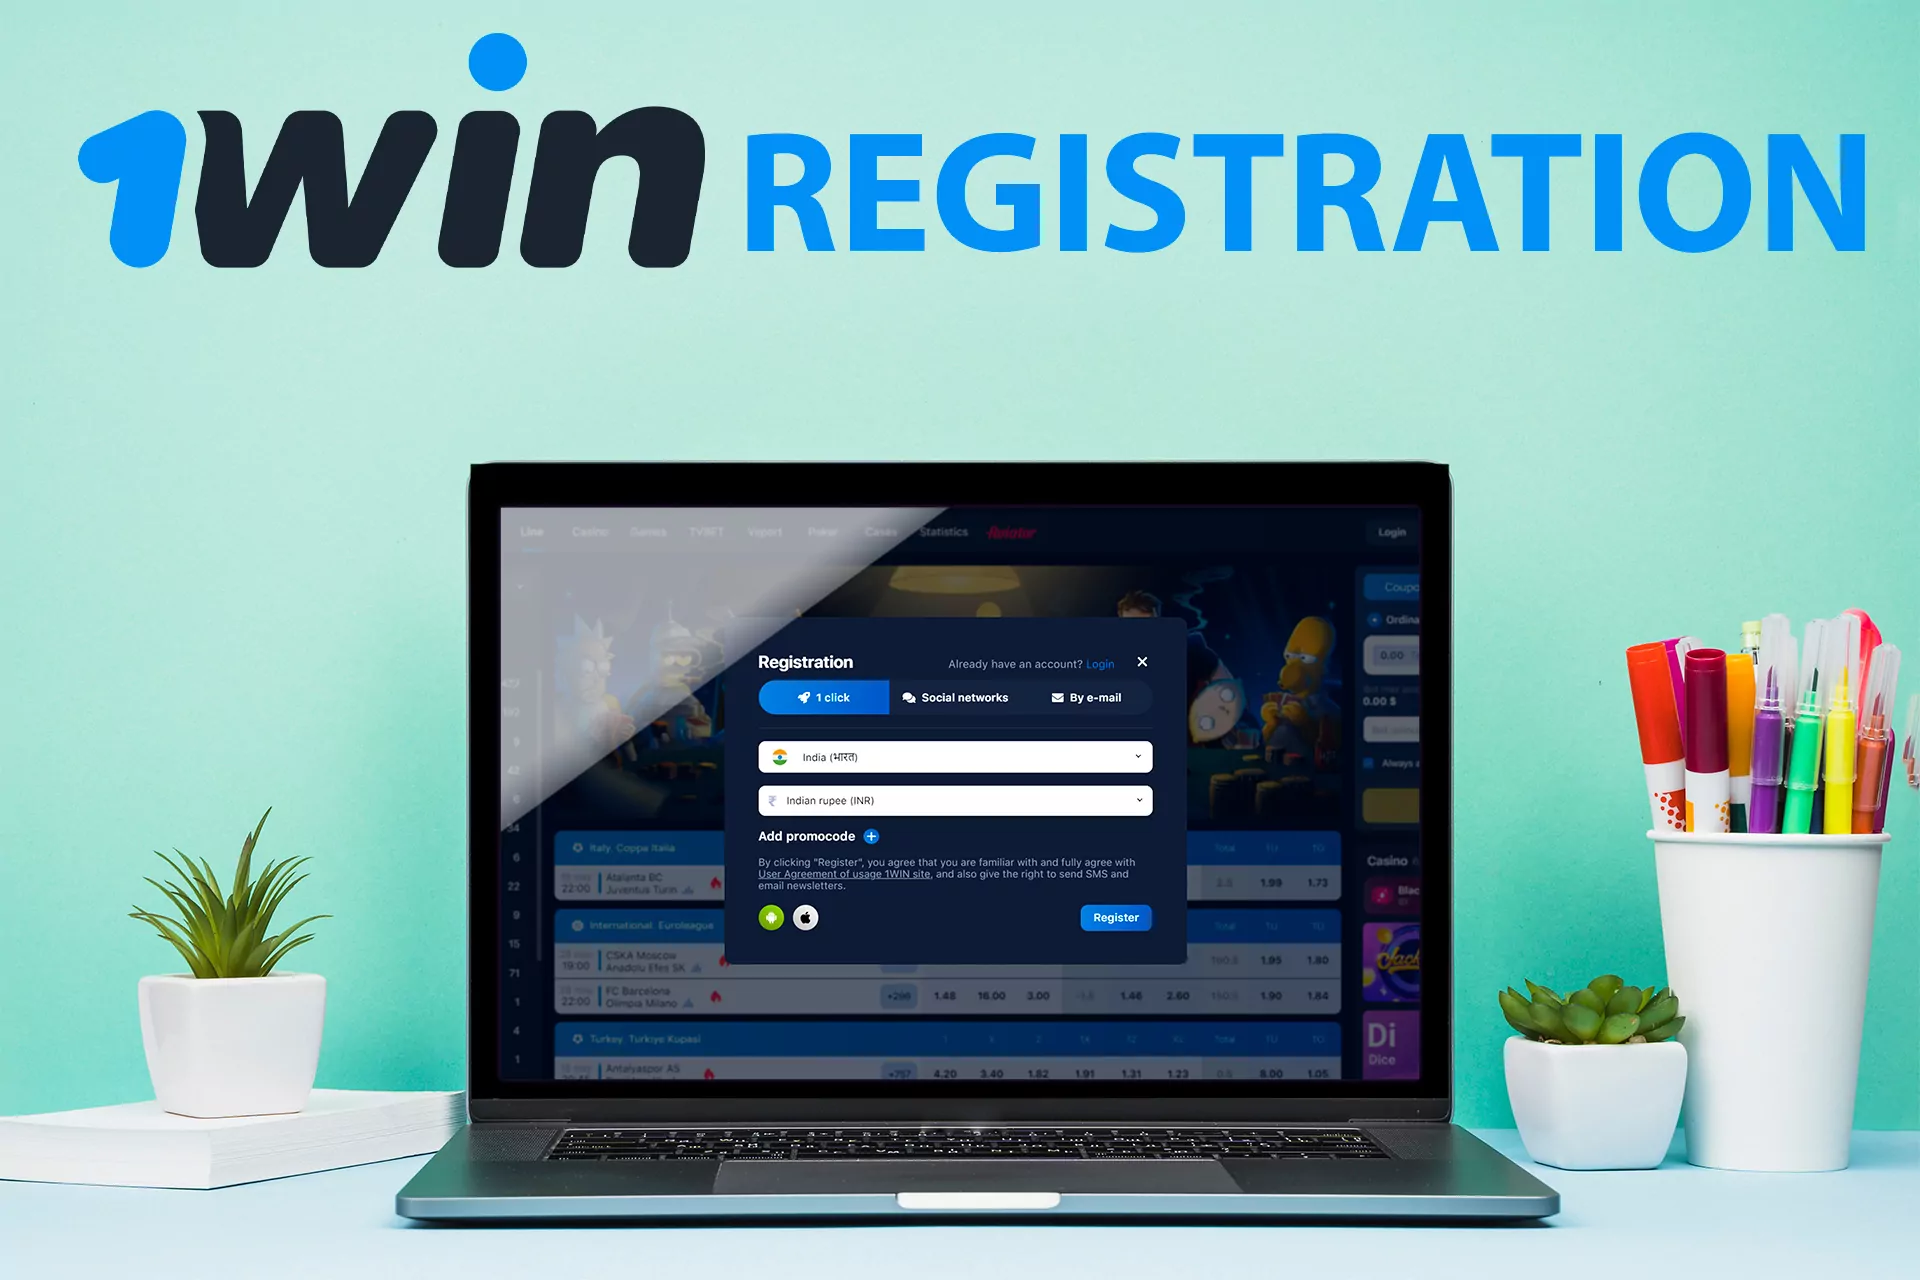 Registration at 1win